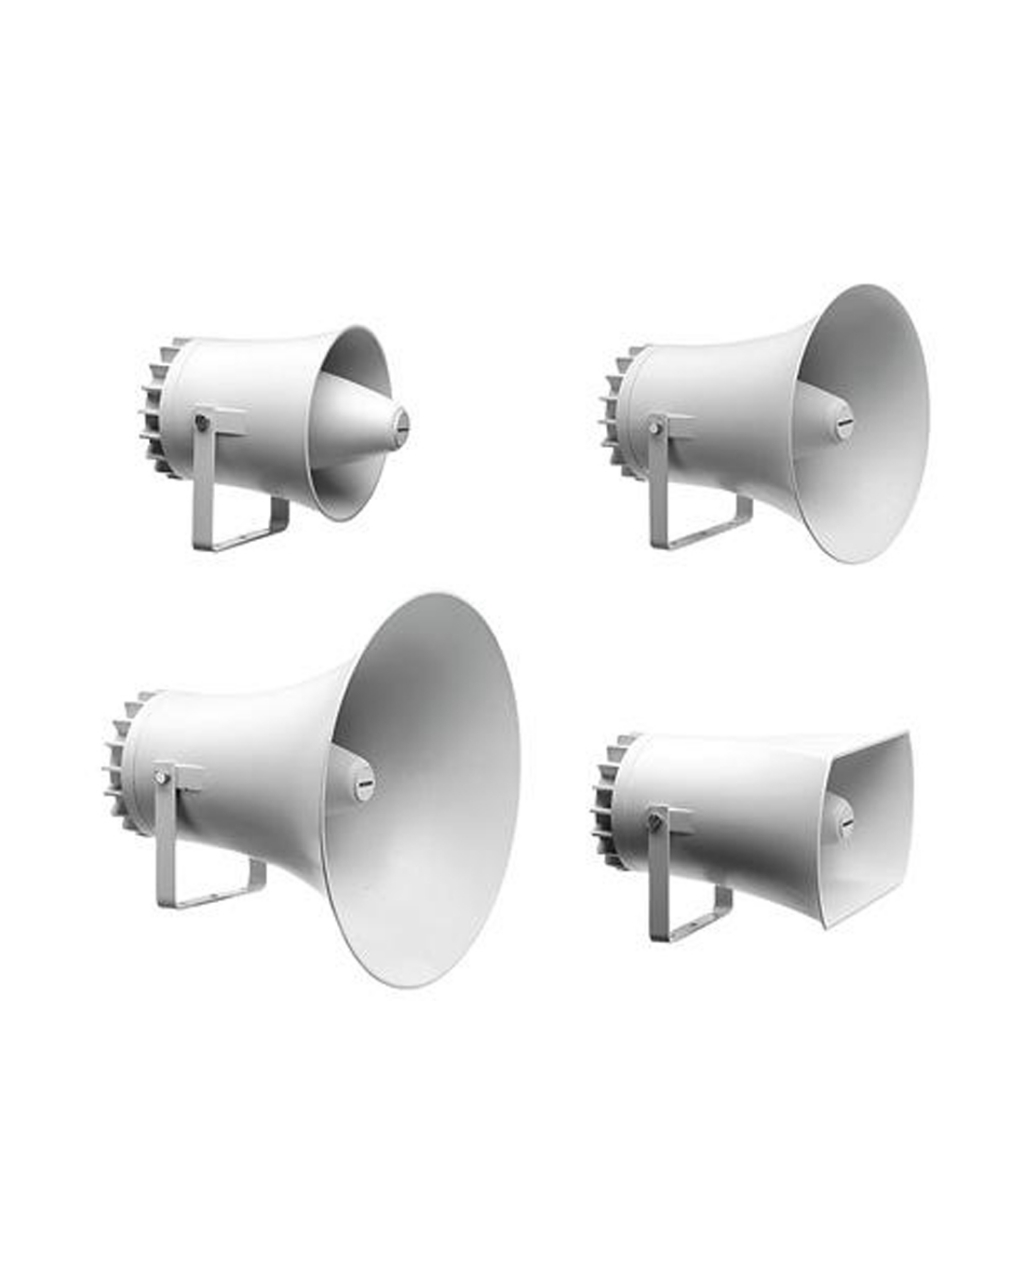 LBC 340x/16 Horn Loudspeakers